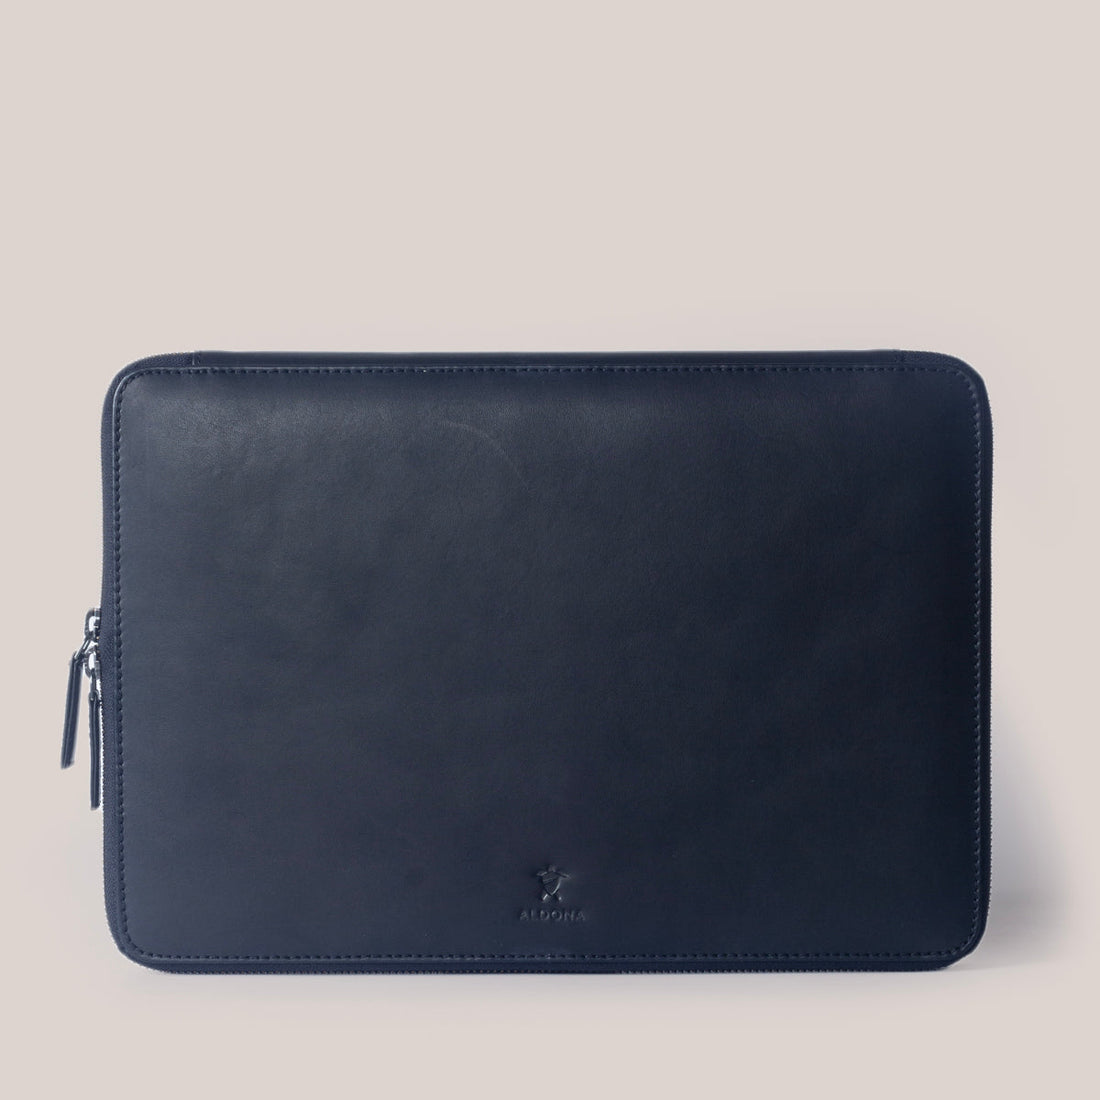 DELL XPS 17 Zippered Laptop Case - Onyx Black